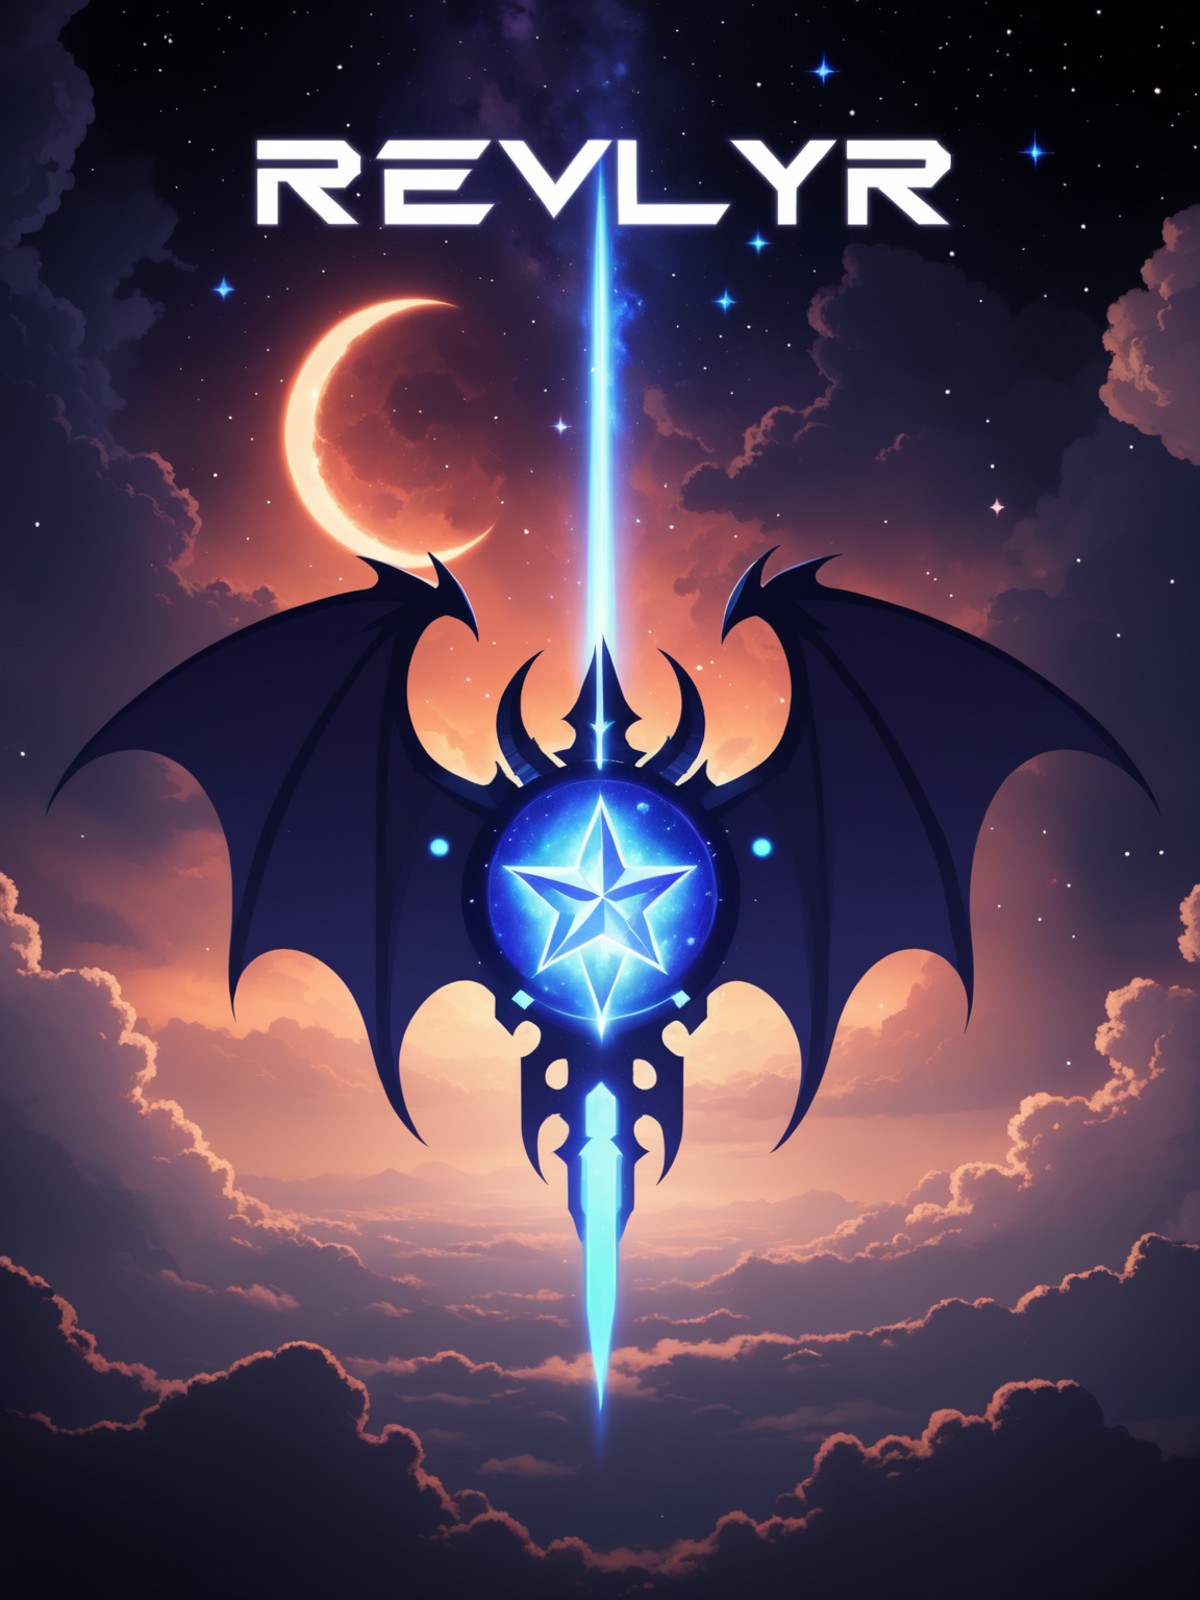 (RevLyr text logo), pixel art, space, clouds, stars, demon